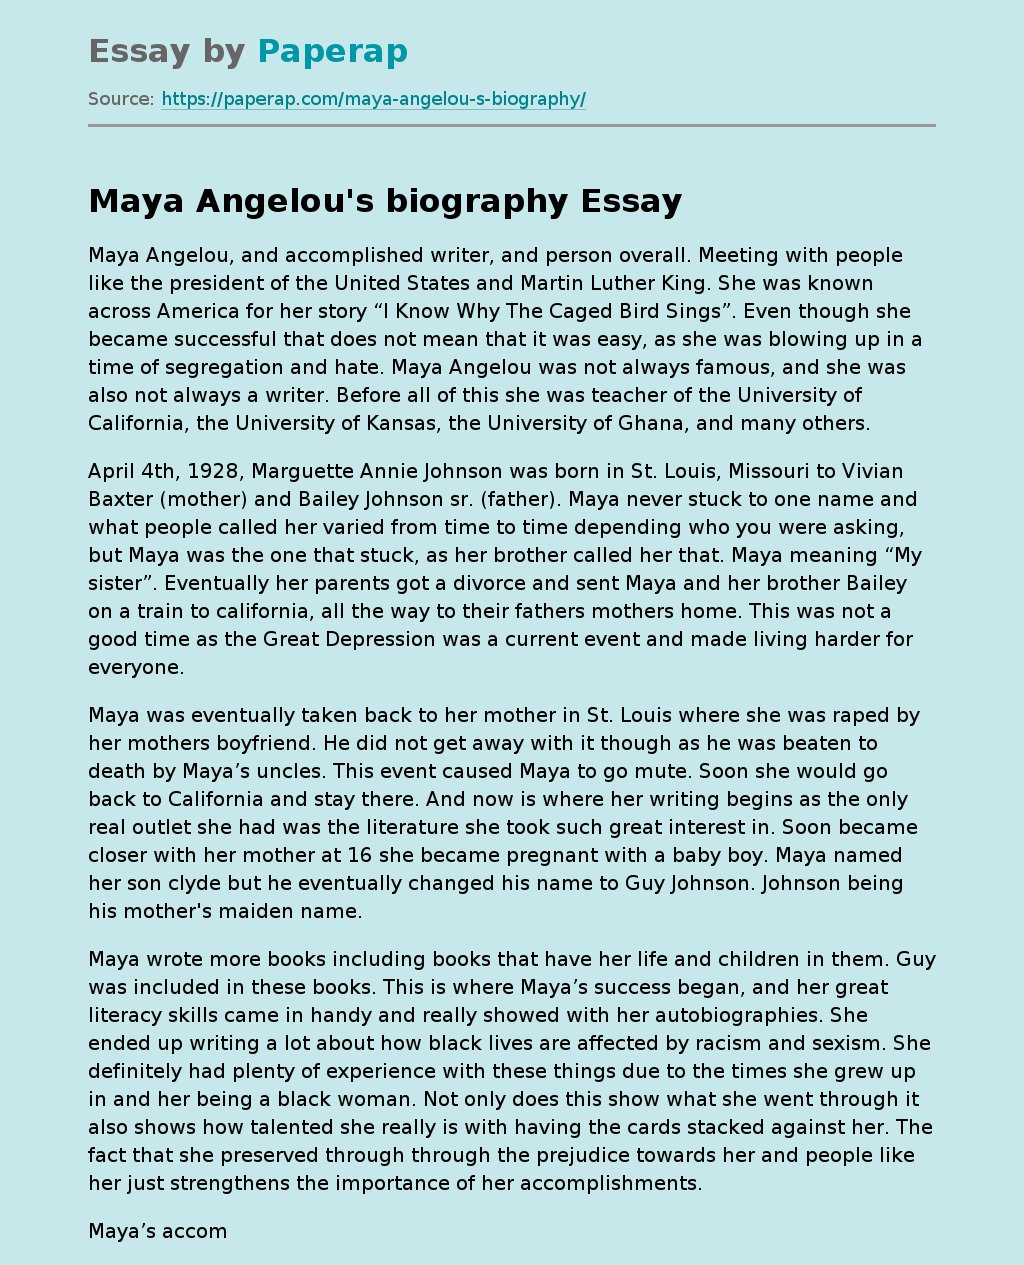 Maya Angelou's biography